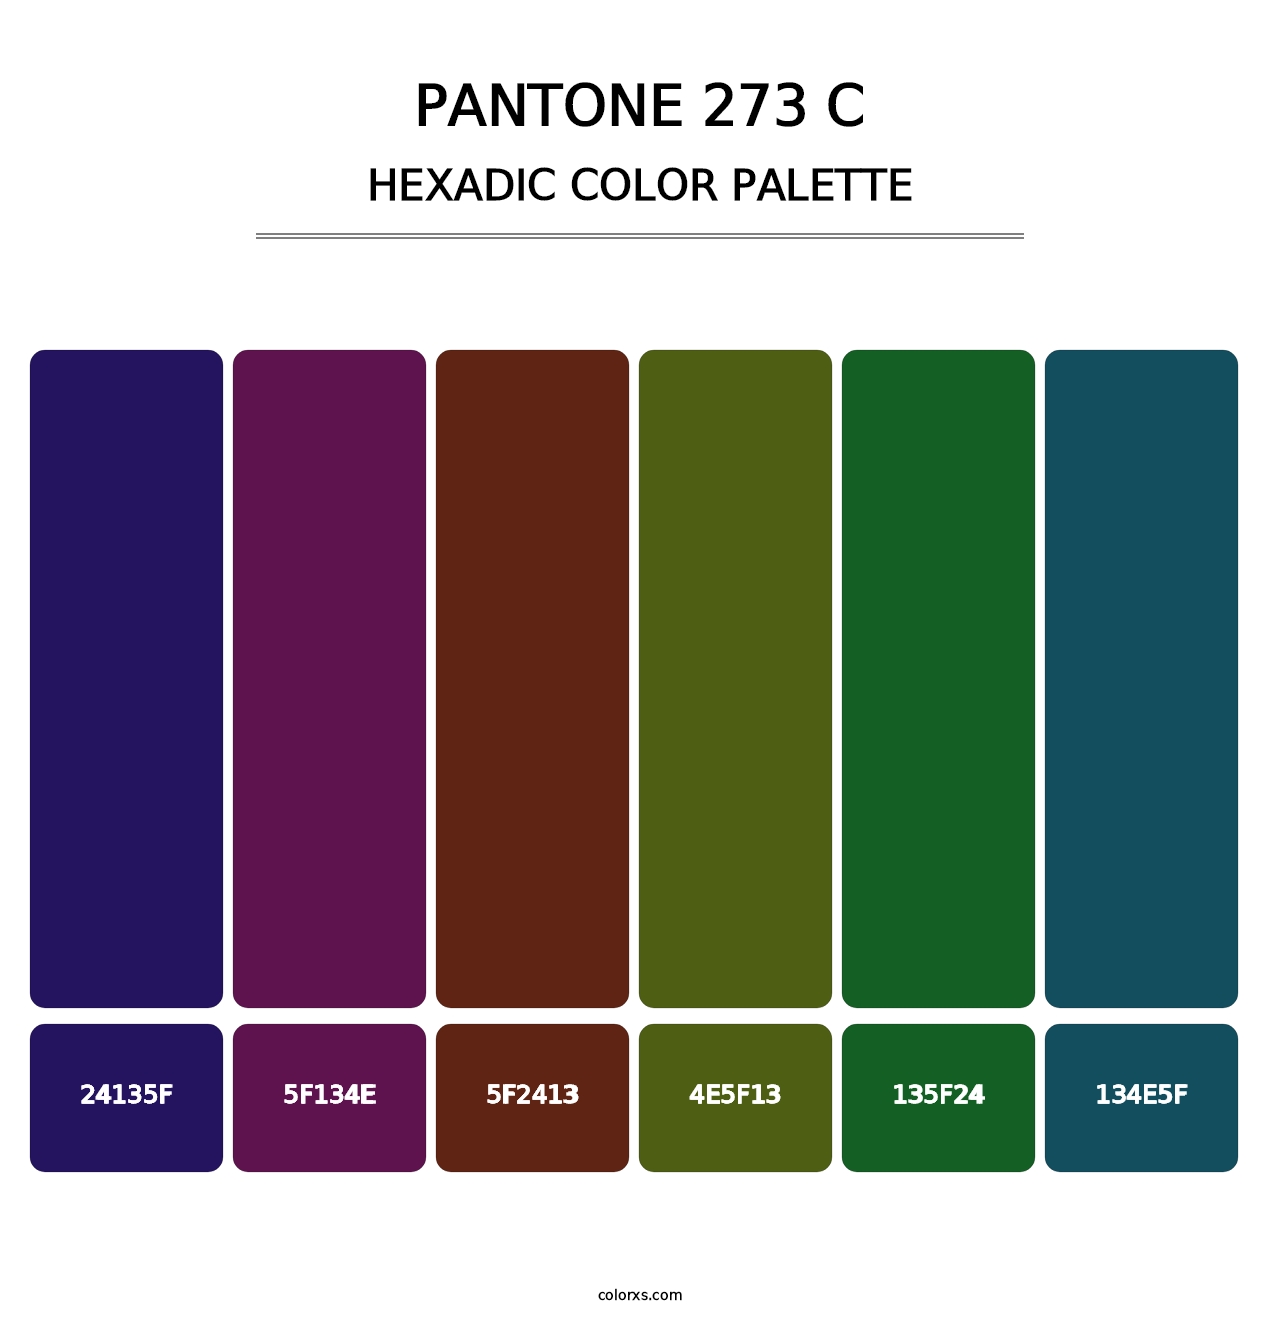 PANTONE 273 C - Hexadic Color Palette